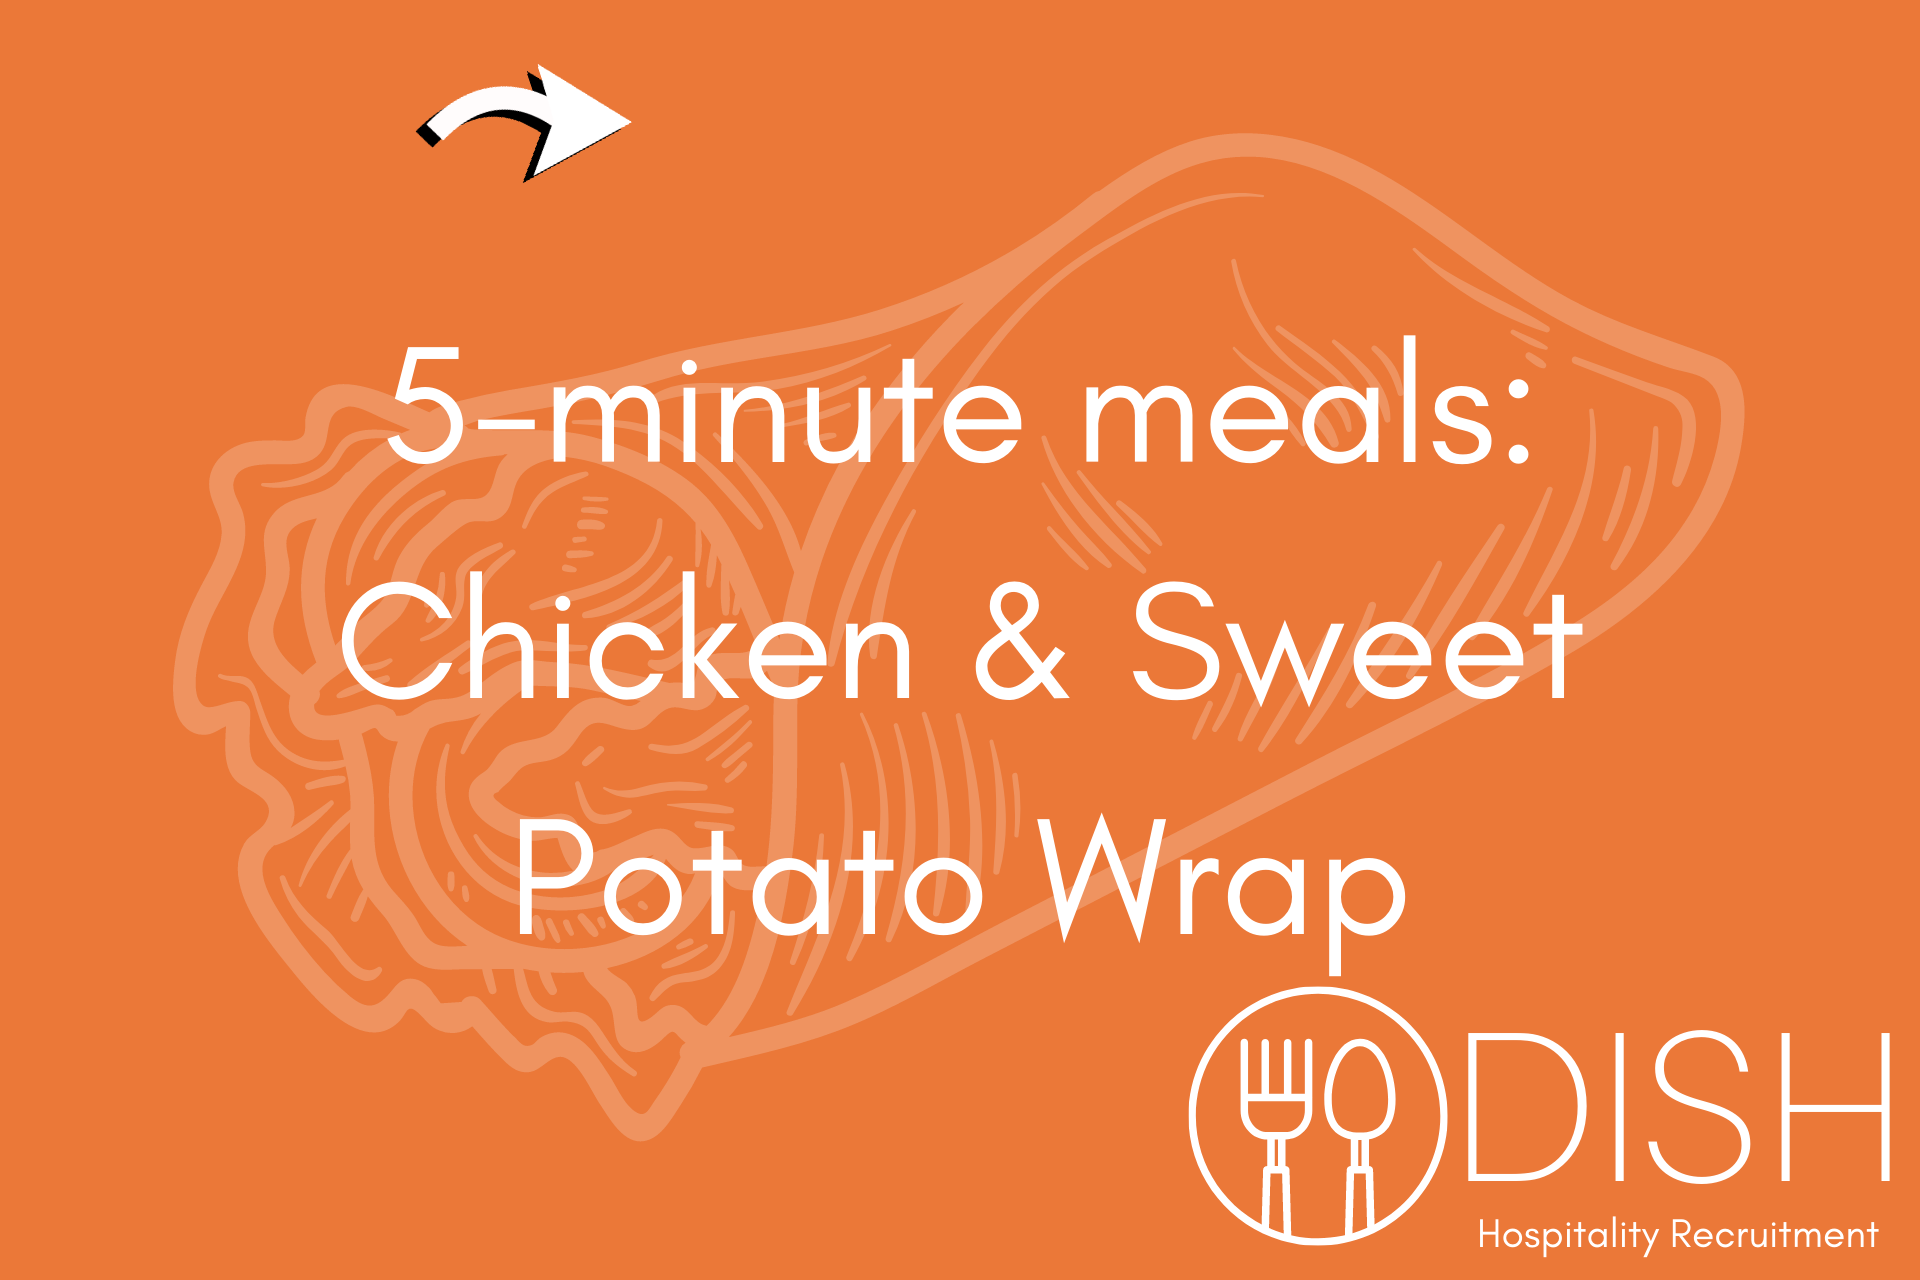 5-minute meals: Chicken & Sweet Potato Wrap